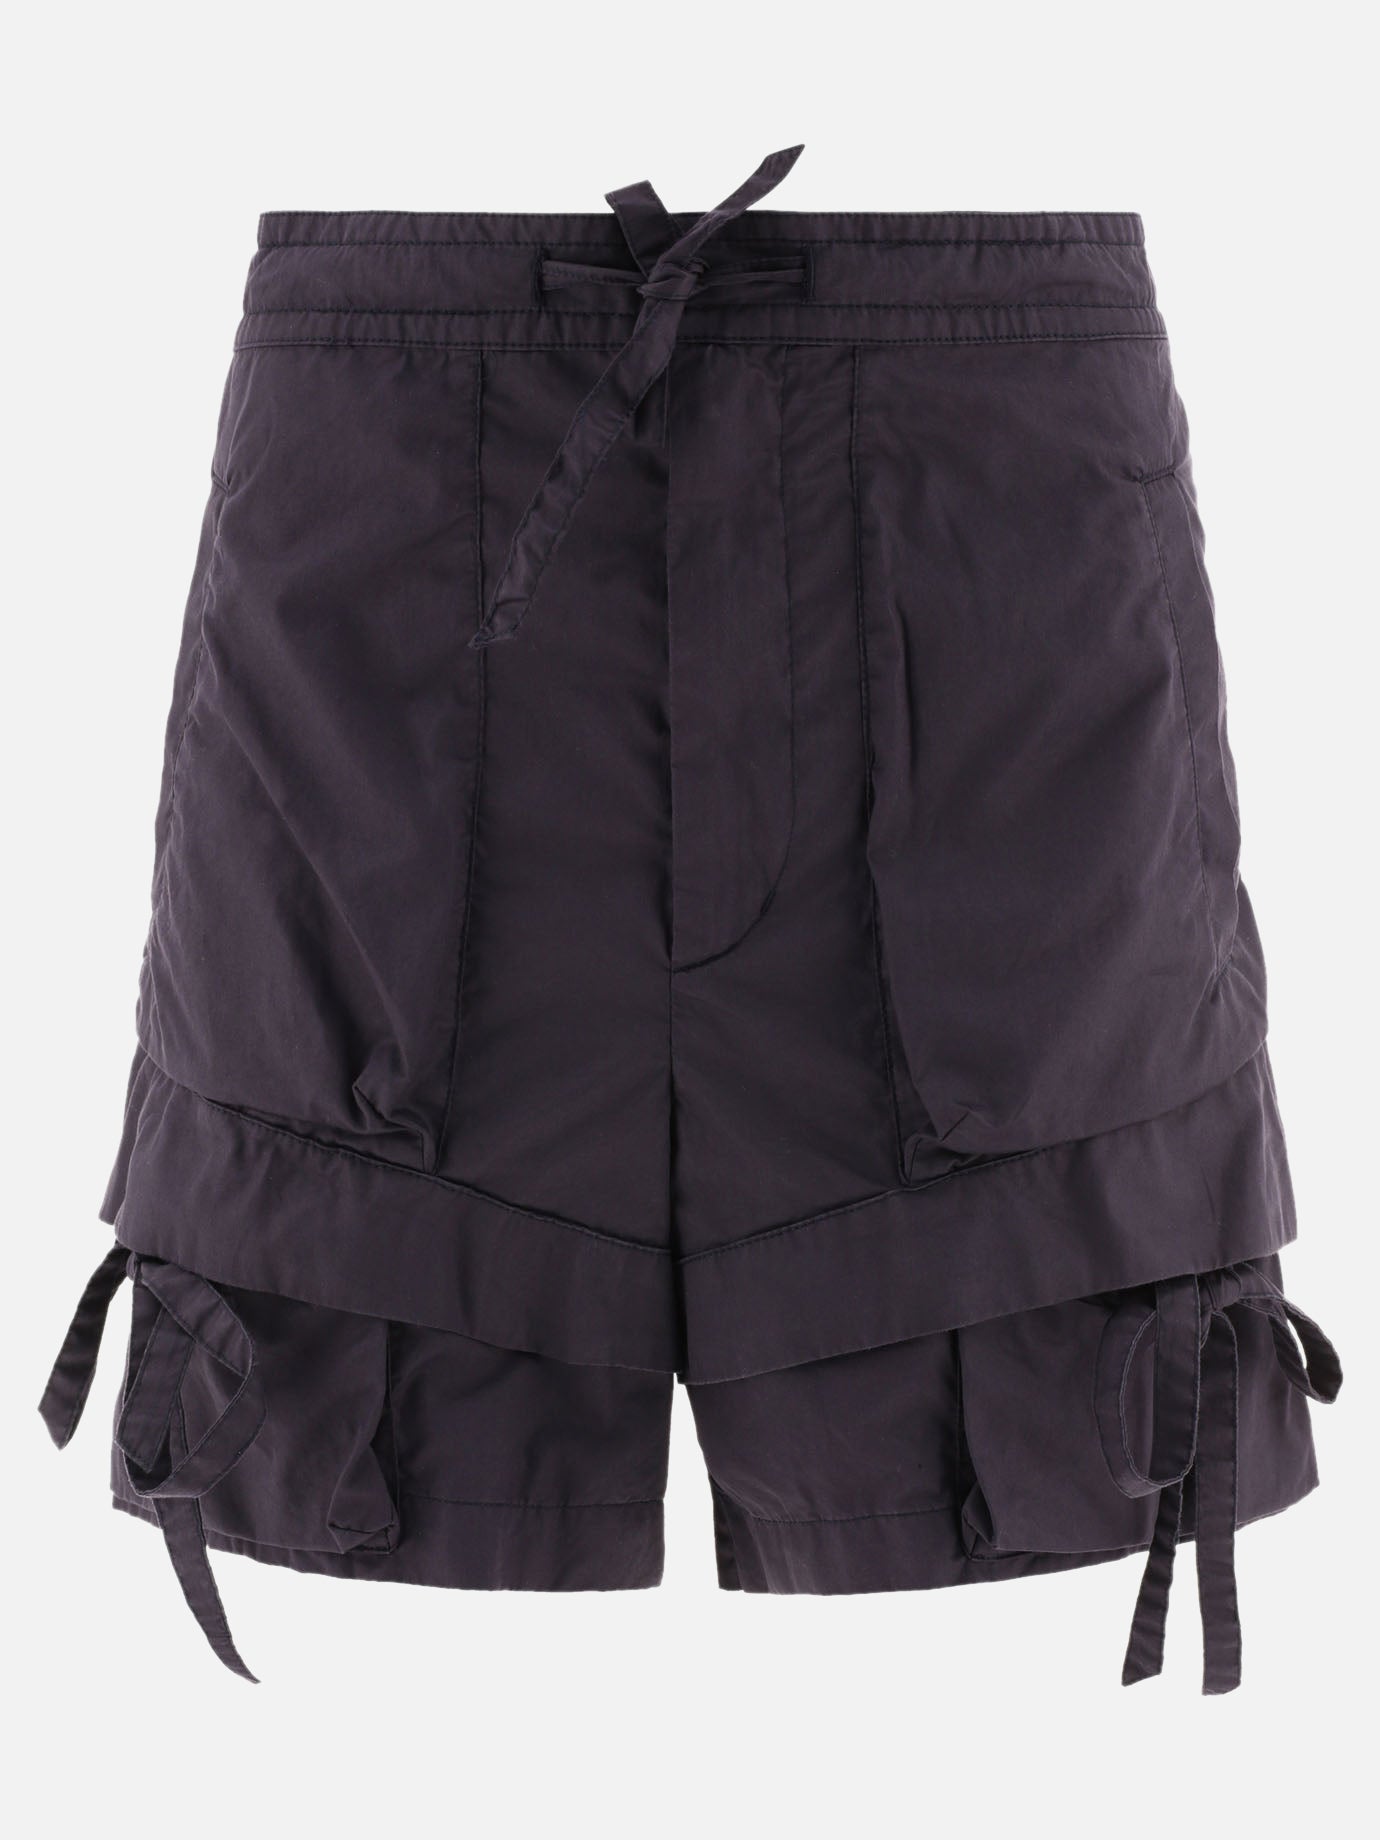 "Nala" cargo shorts